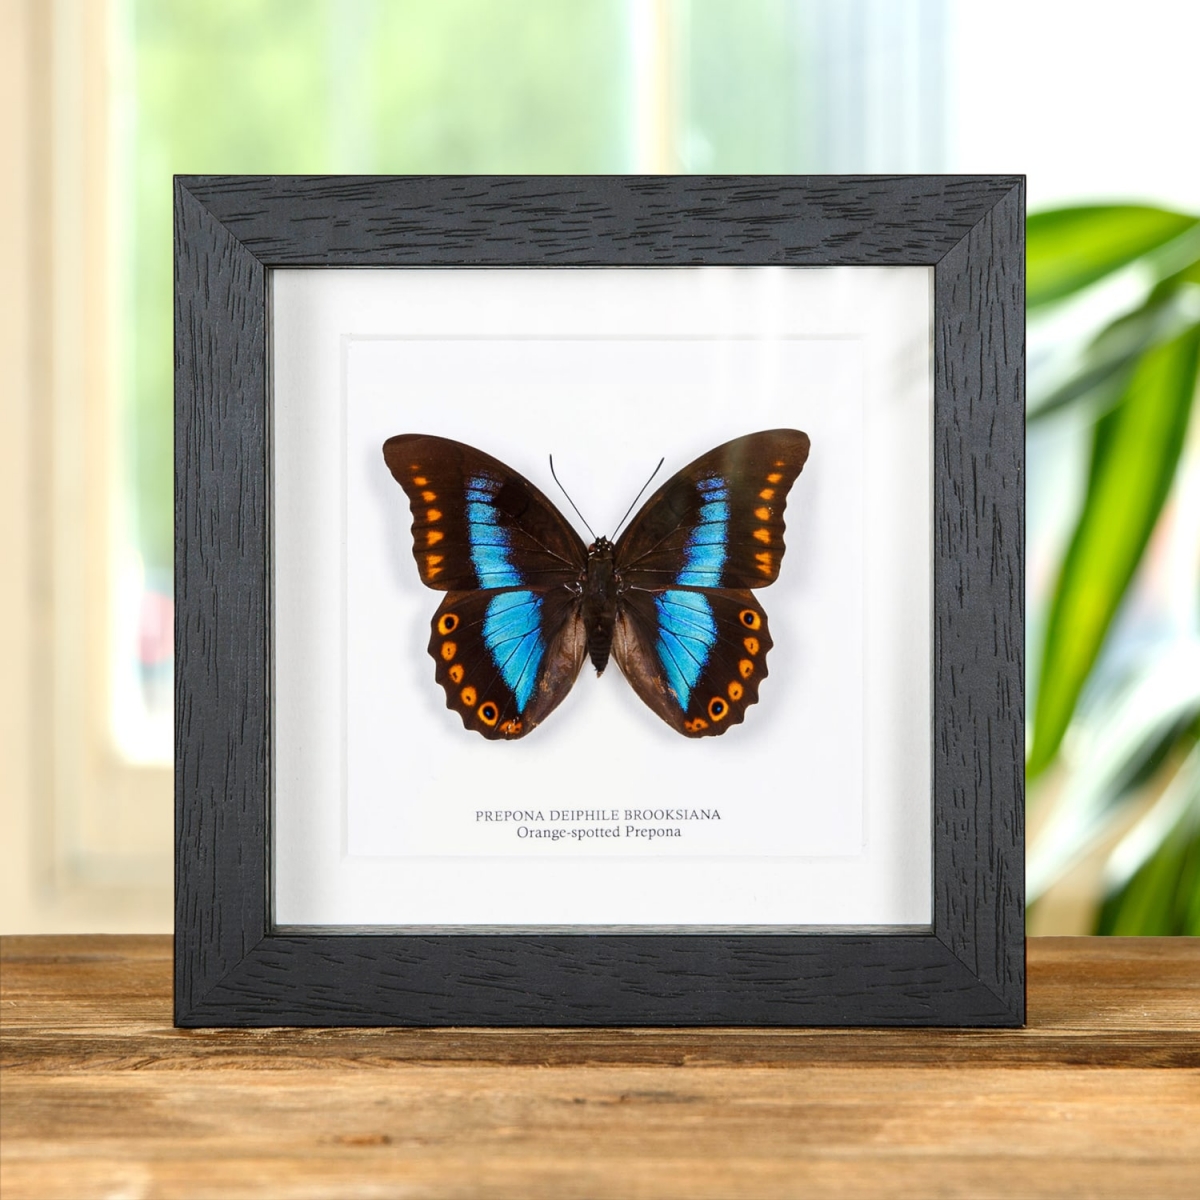 Minibeast Female Orange-spotted Prepona Butterfly in Box Frame (Prepona deiphile brooksiana)